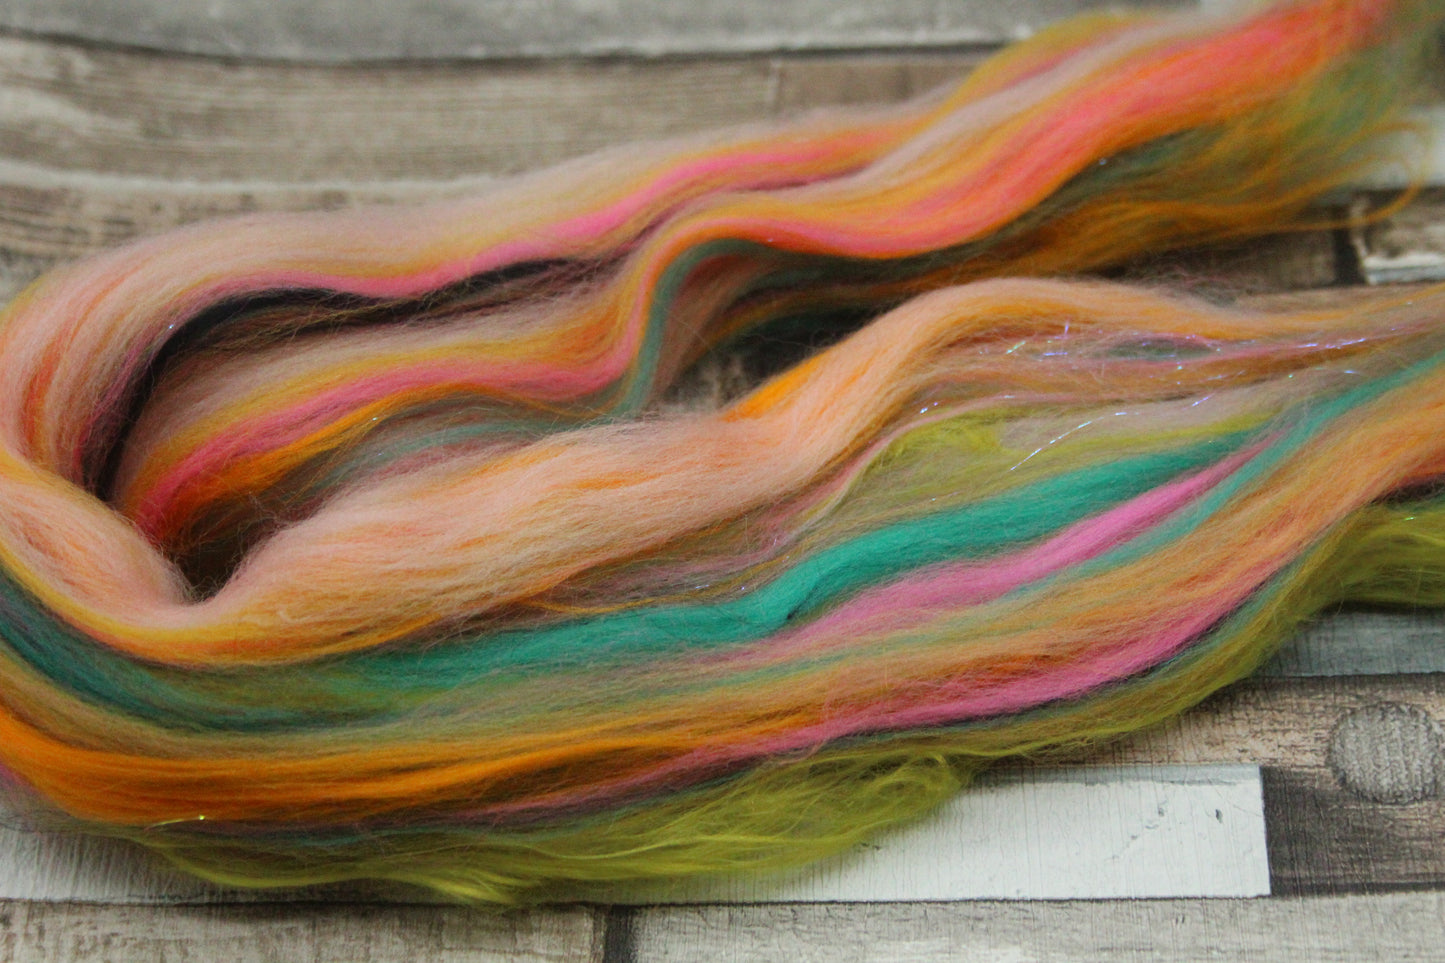 Merino Wool Blend - Yellow Green Pink Orange - 6 grams / 0.2 oz  - Fibre for felting, weaving or spinning